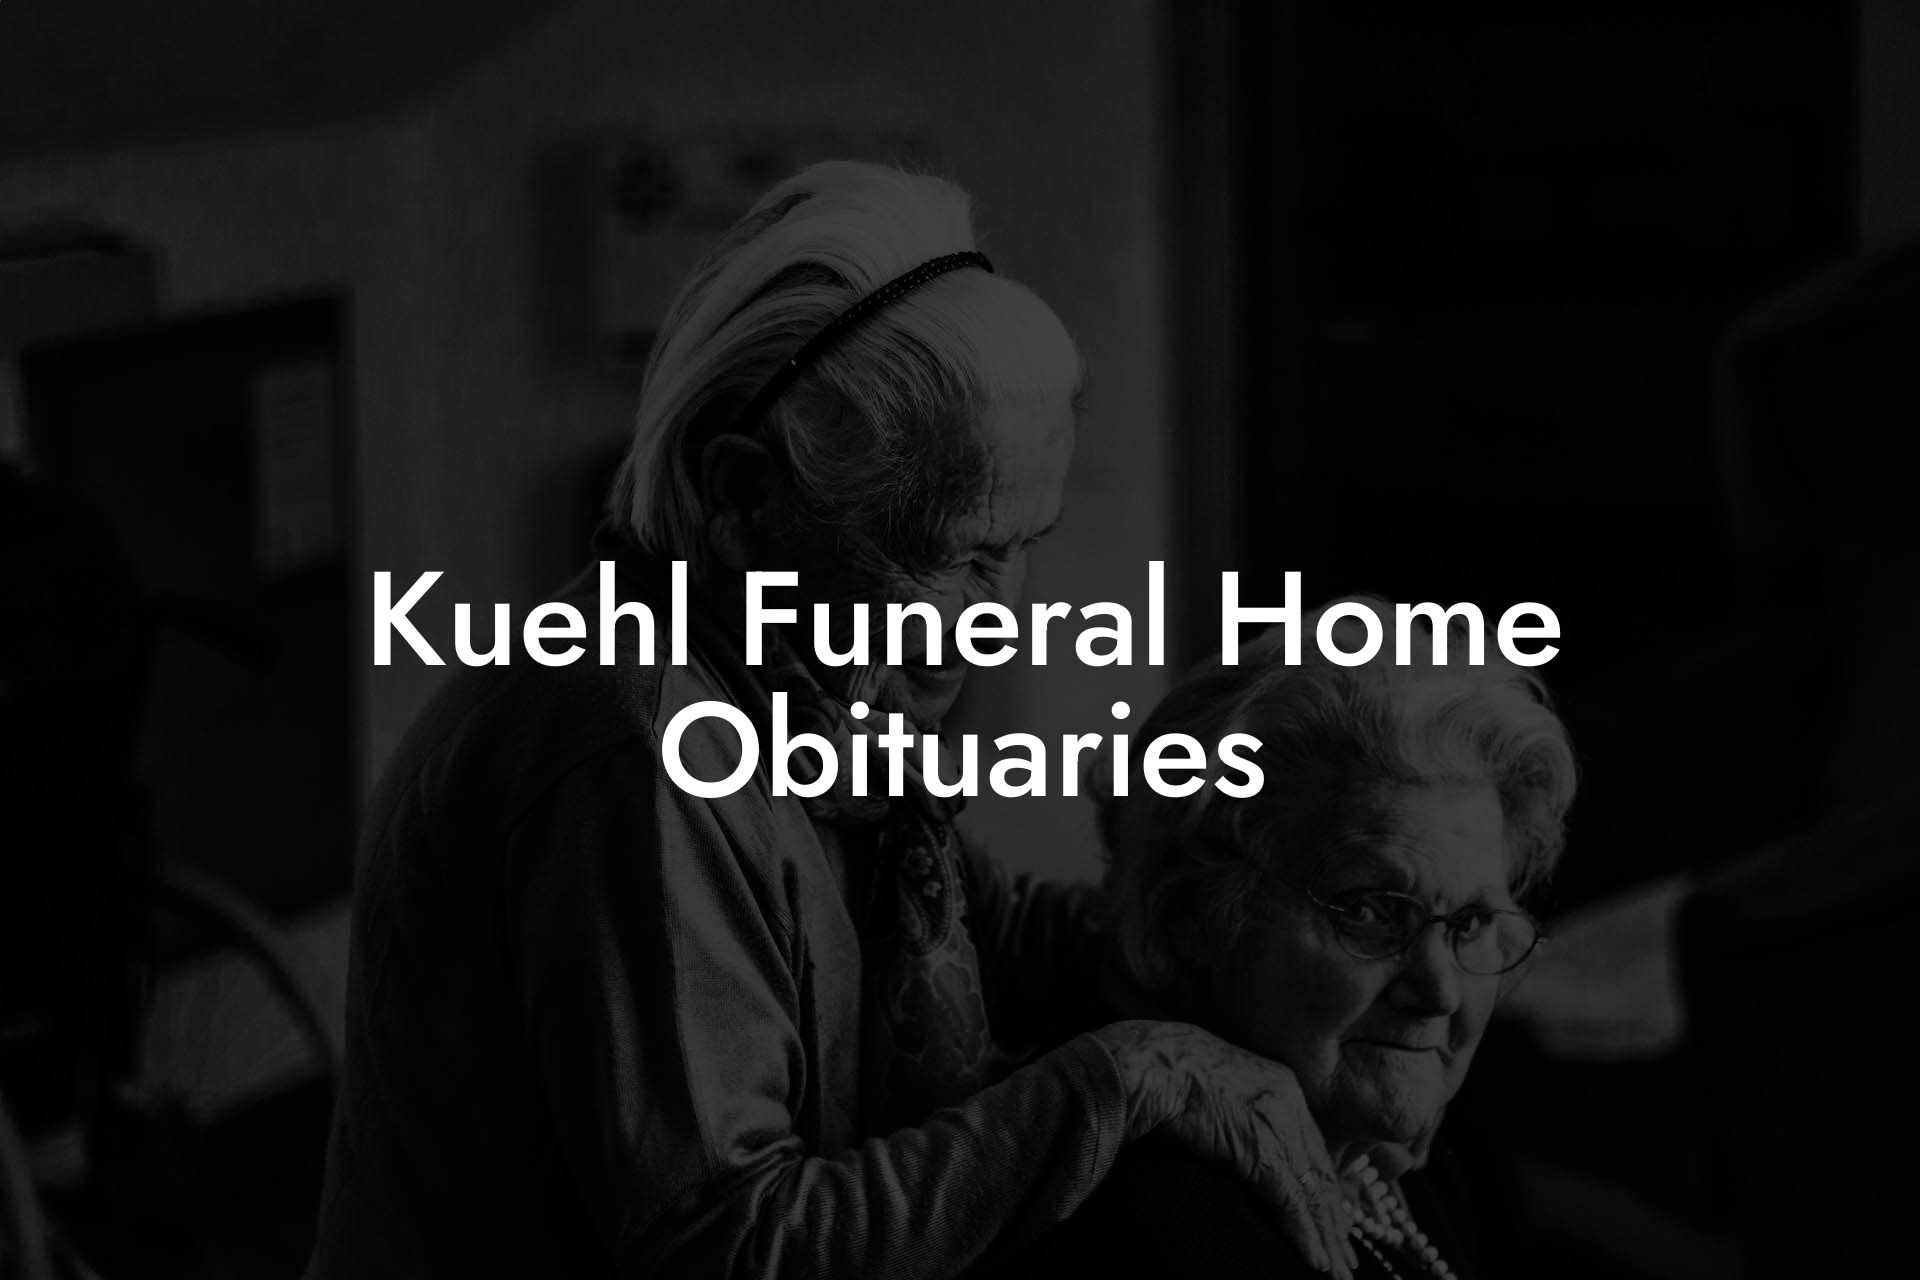 Kuehl Funeral Home Obituaries